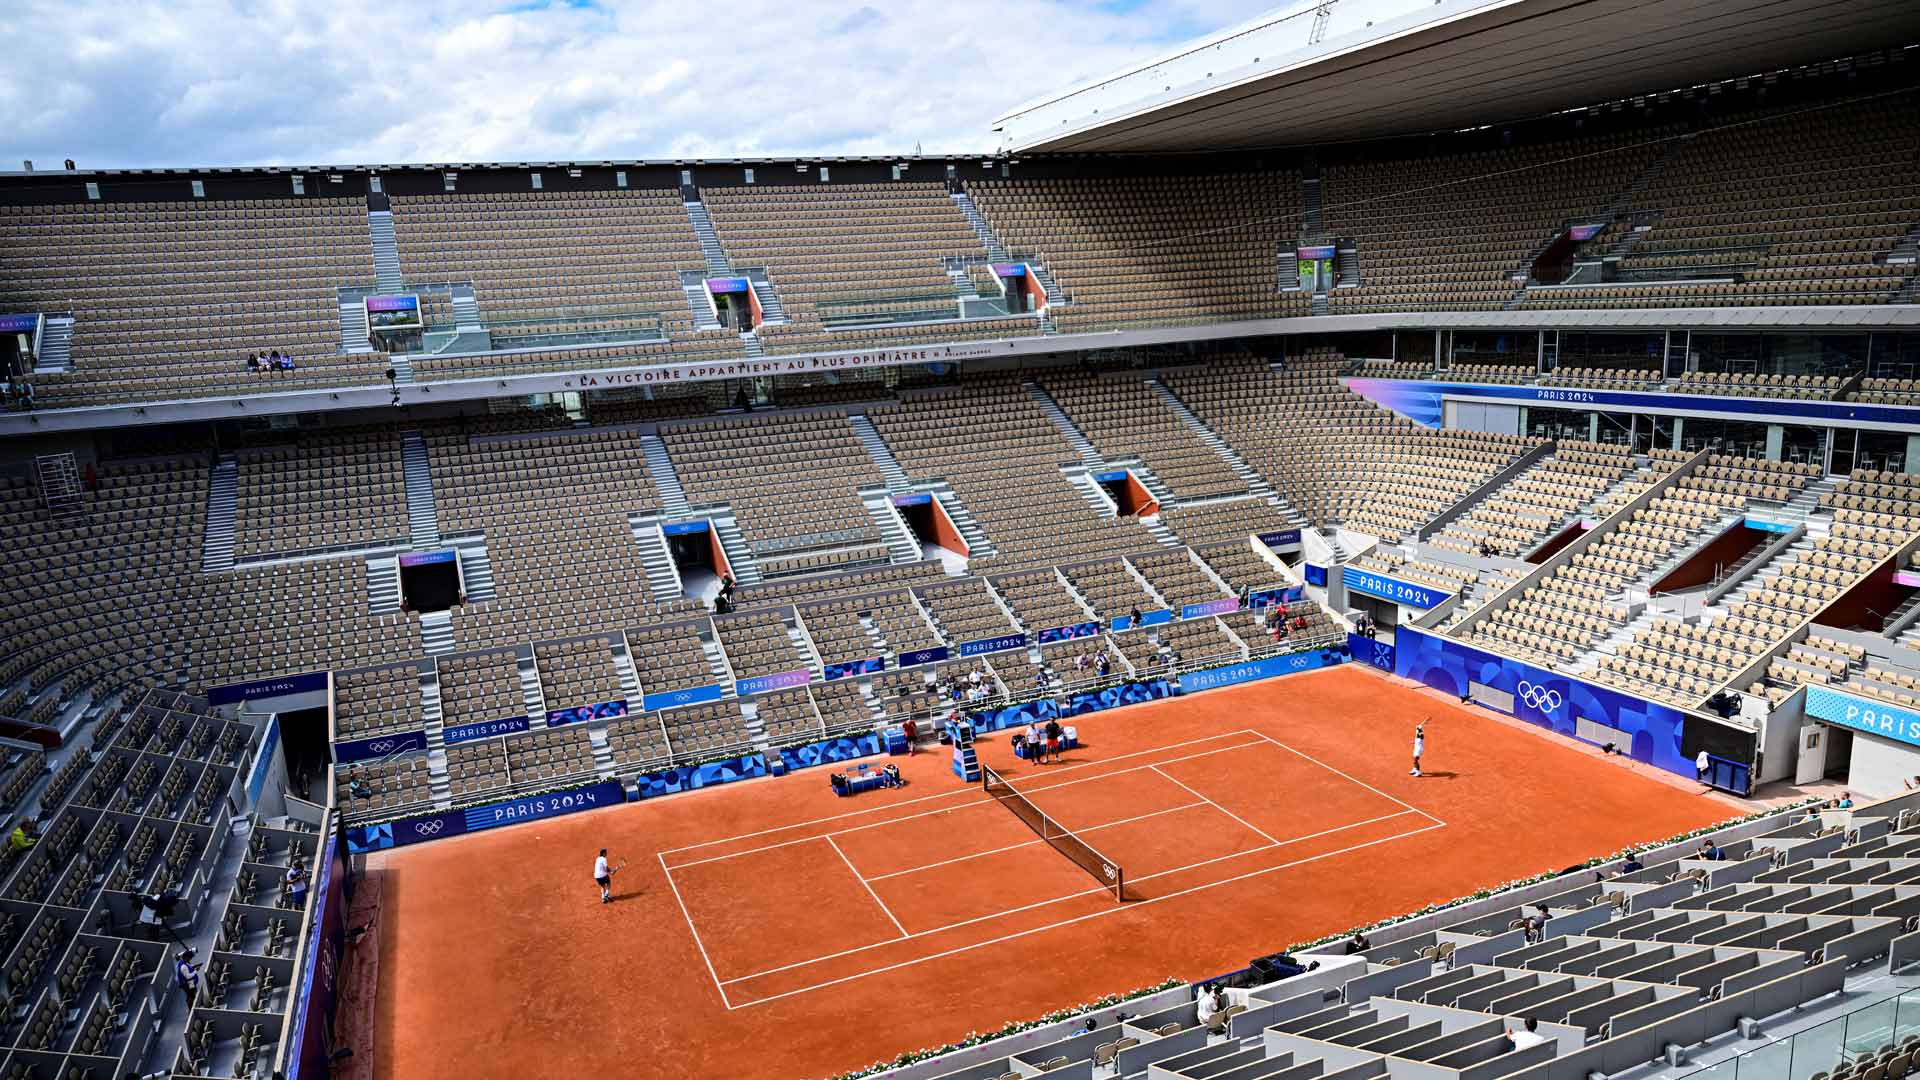 Roland Garros is the venue for the Paris Olympics tennis event.